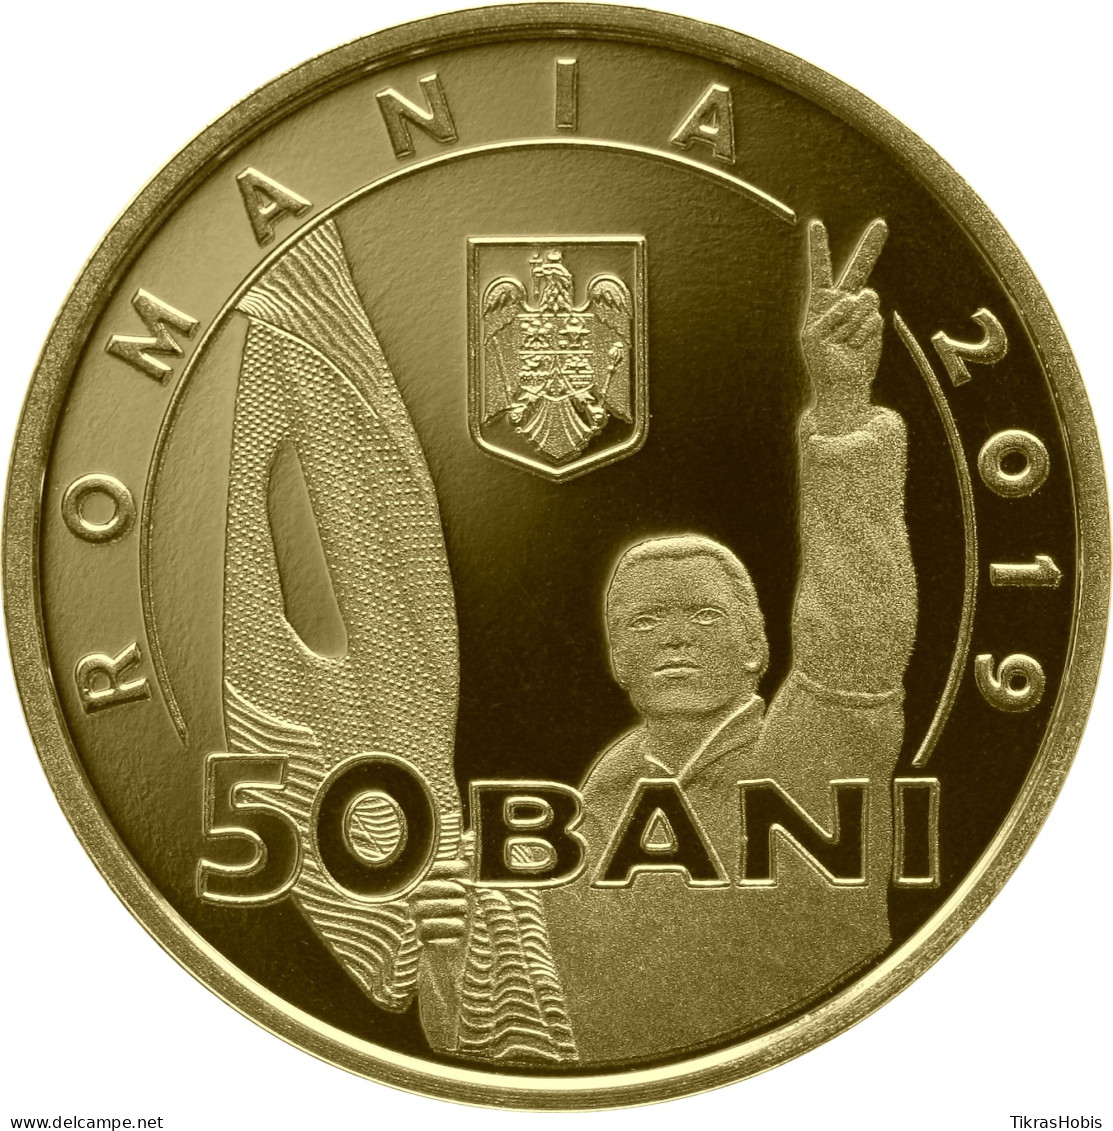 Romania 50 Banies, 2019 30th Revolution 1989 - Romania